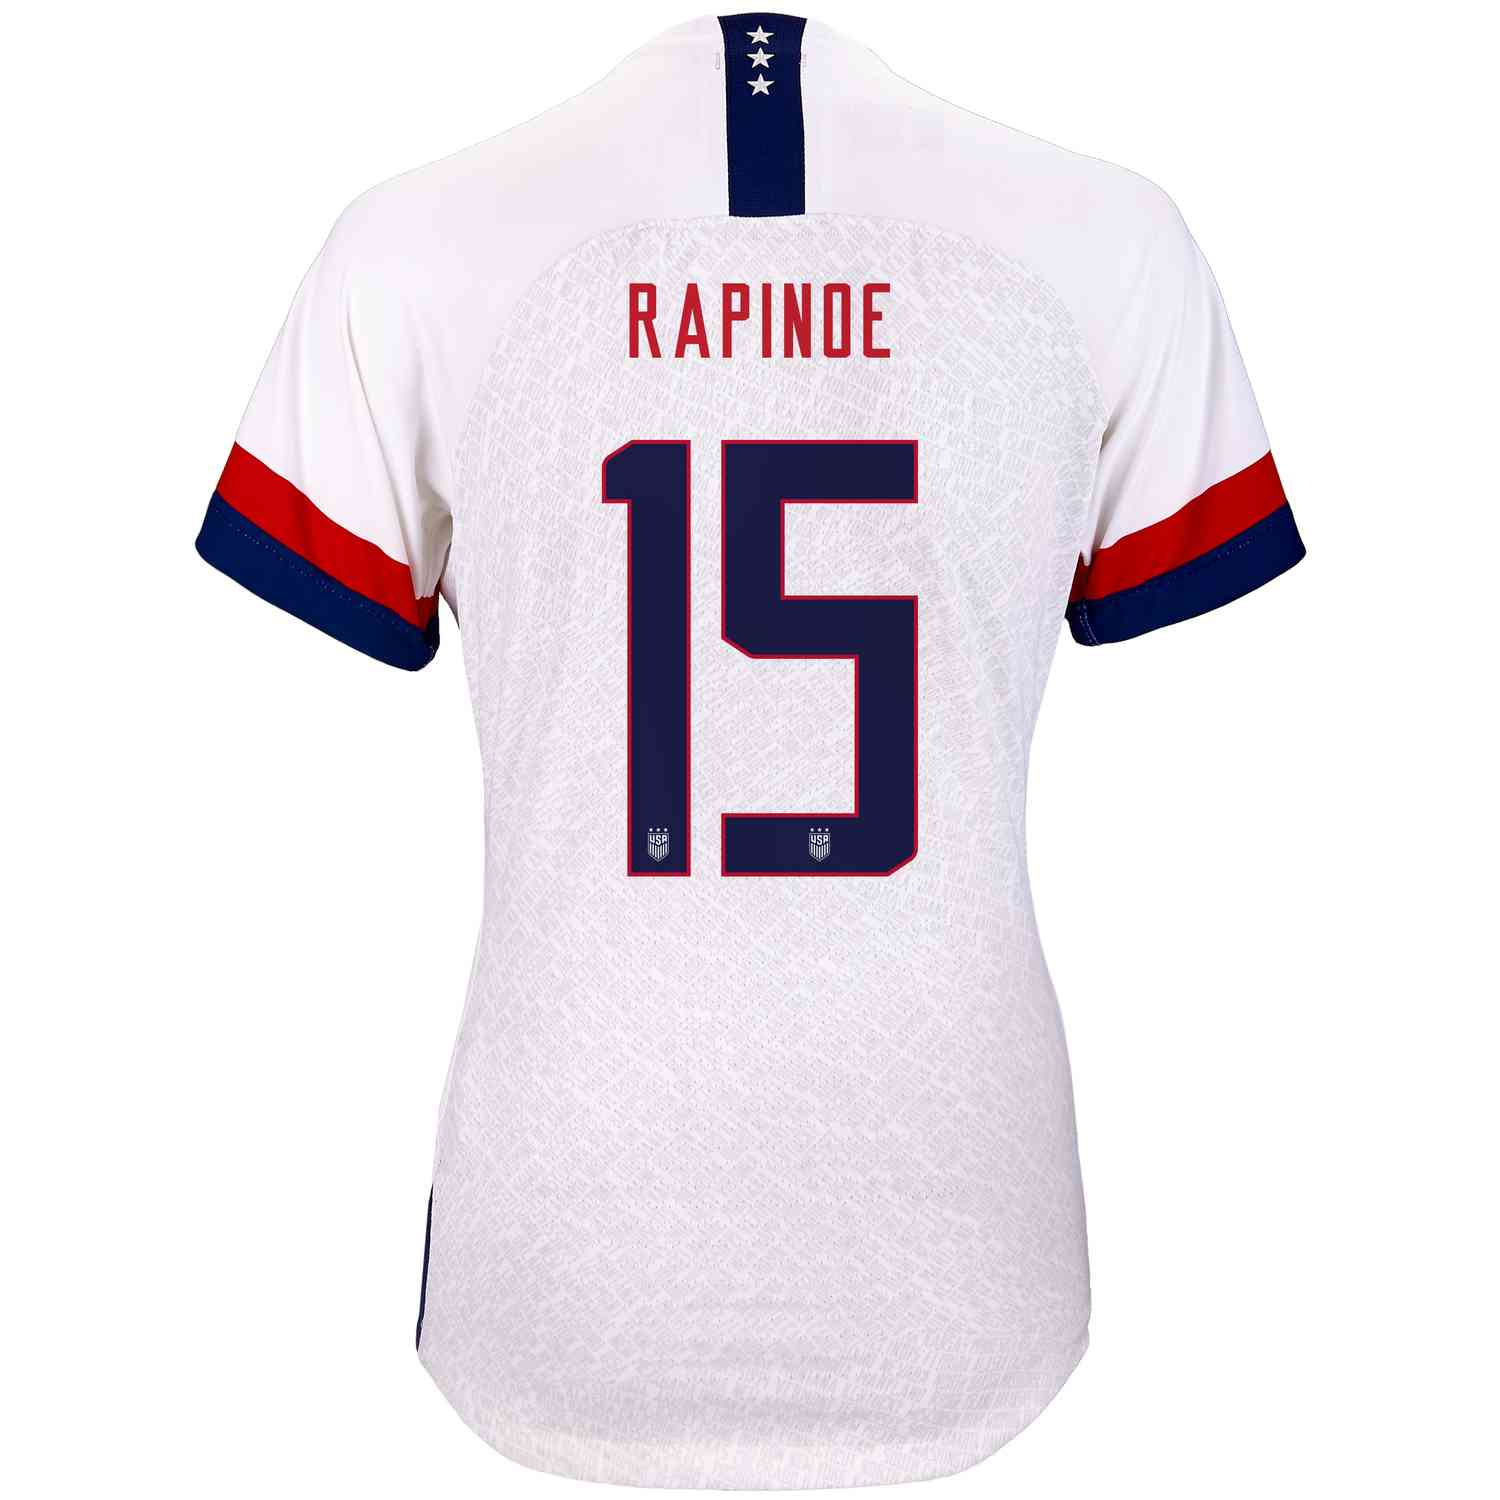 official rapinoe jersey